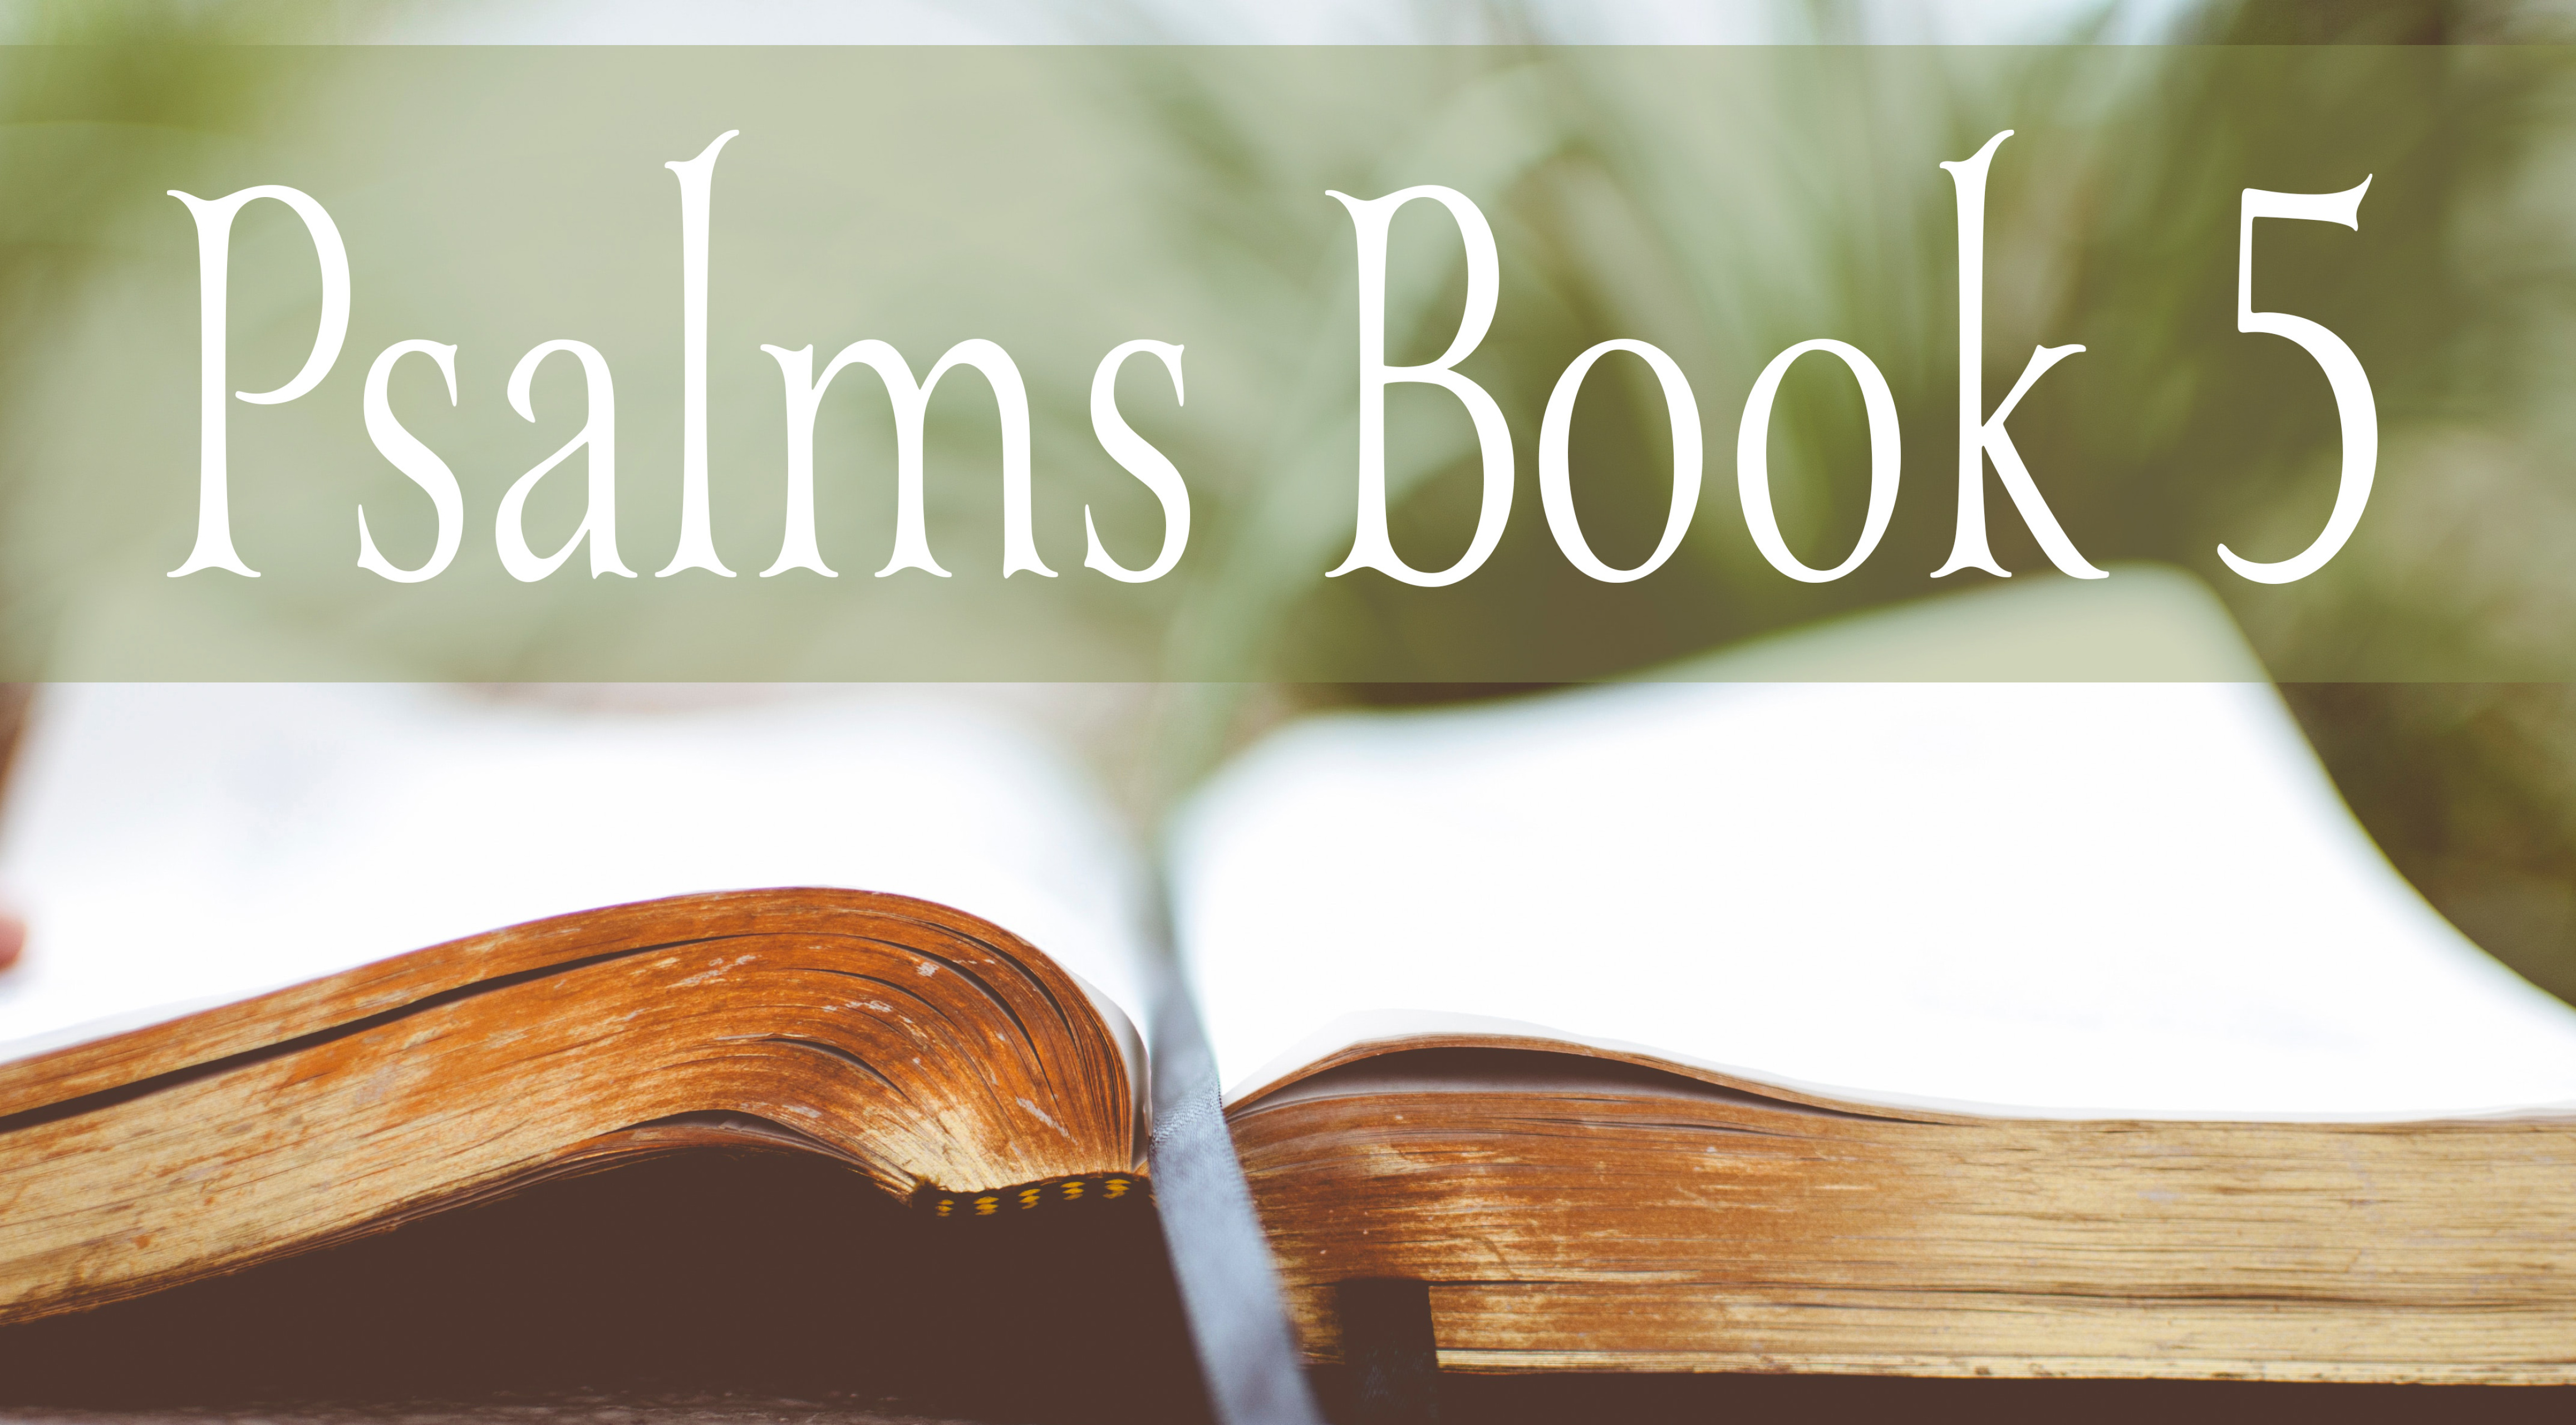 Psalms Book 5